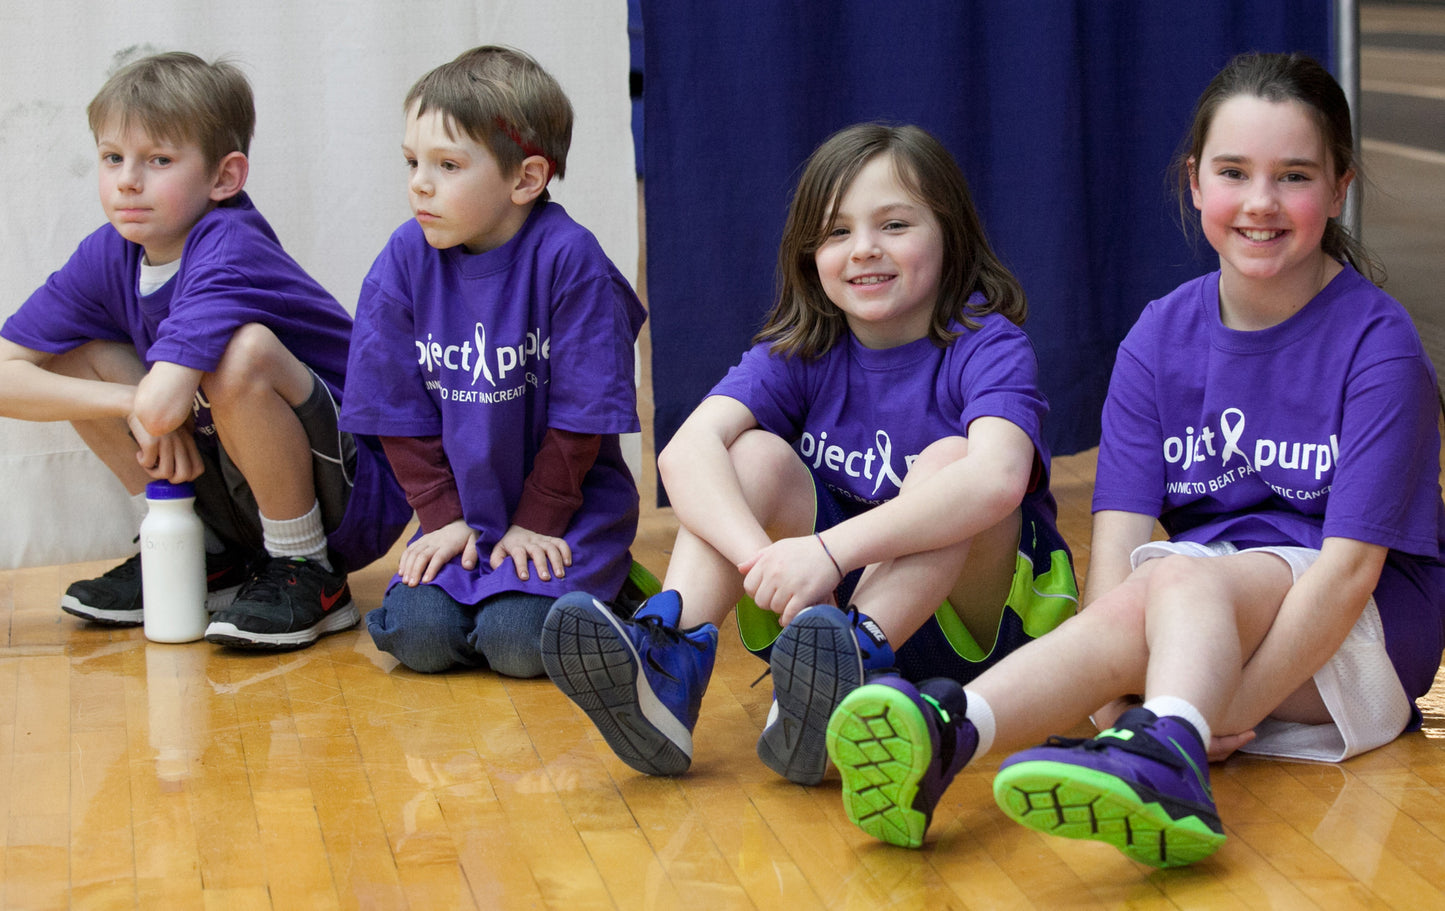 children on gym floor wearing Purple shirt with white project purple logo